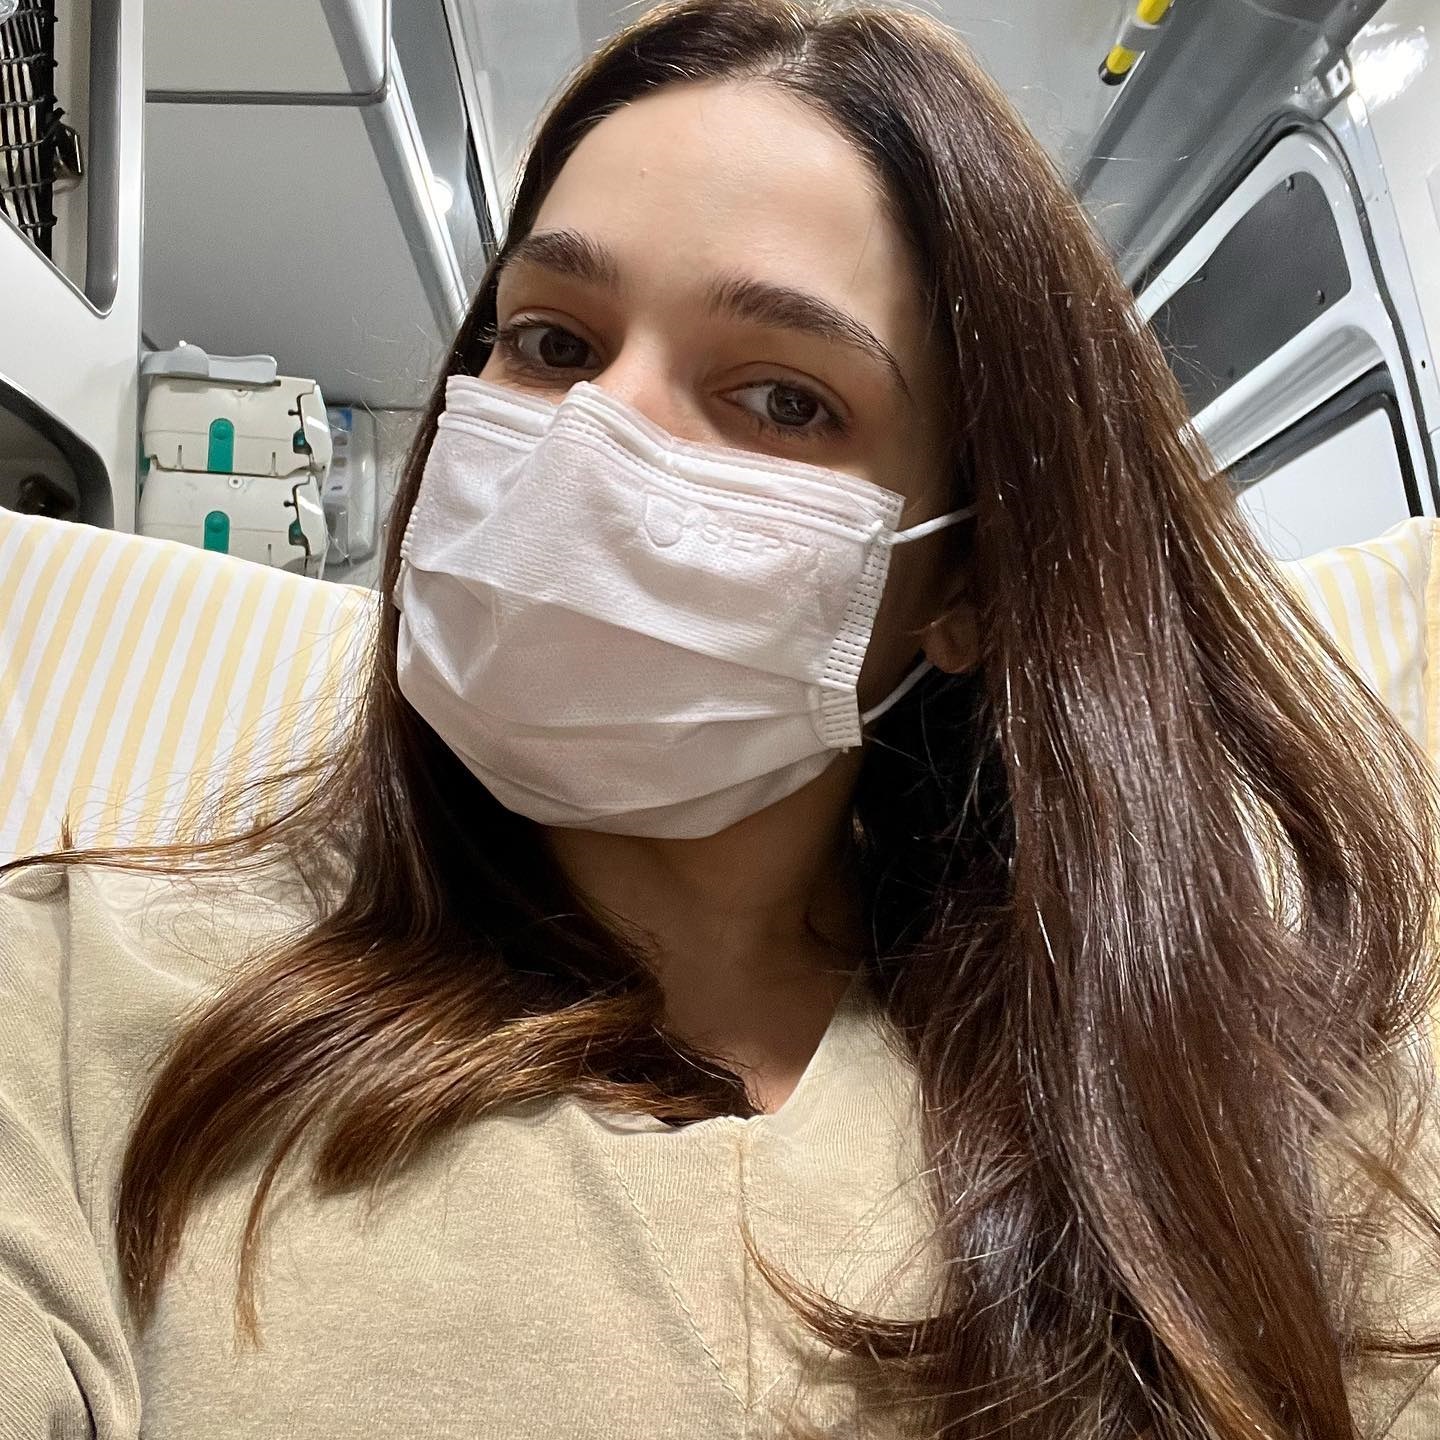 Sabrina Petraglia volta a hospital após cirurgia: “Comecei a me sentir mal”